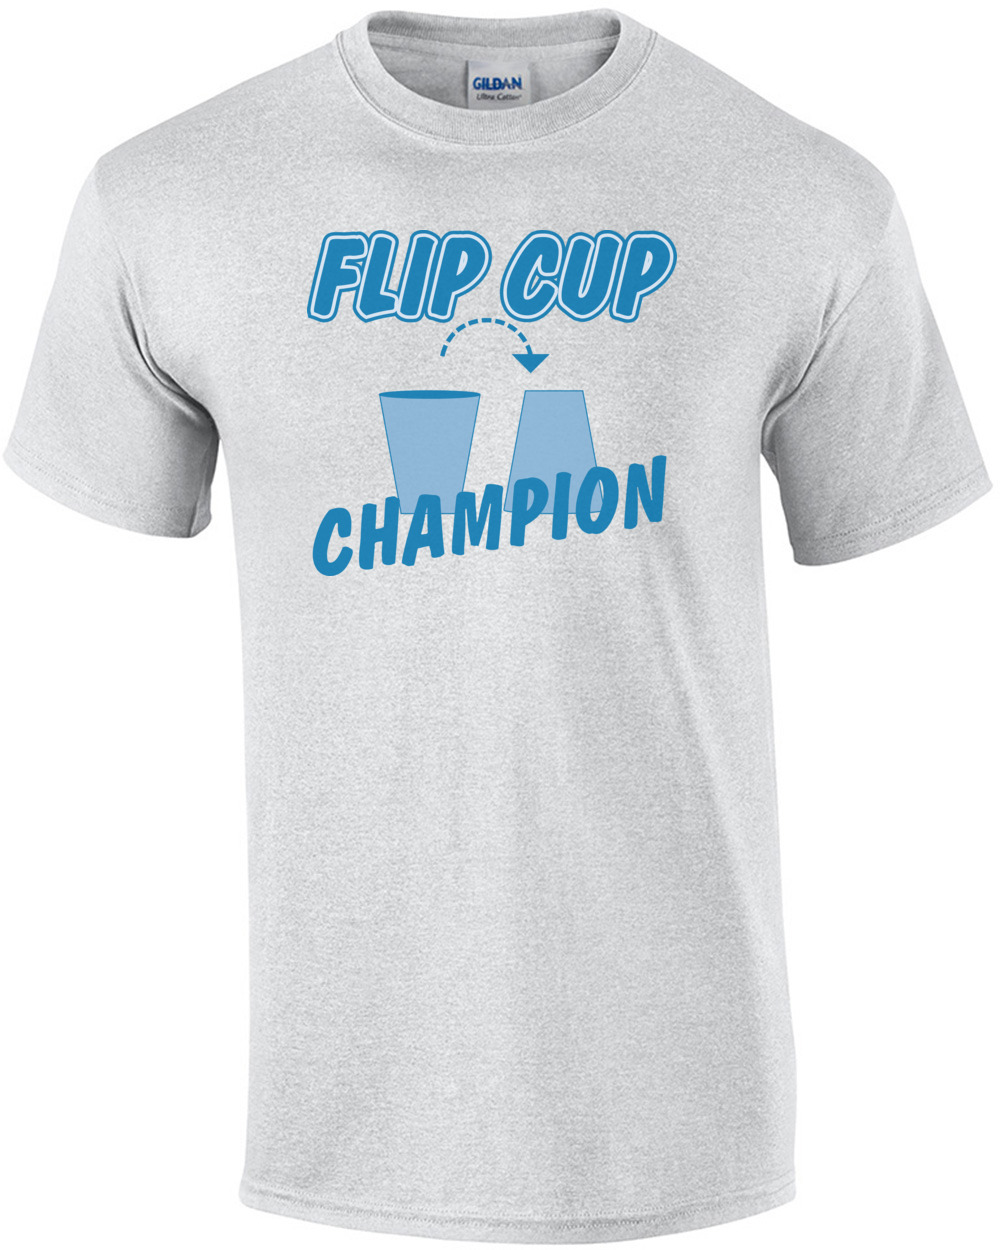 flip cup champion t shirt